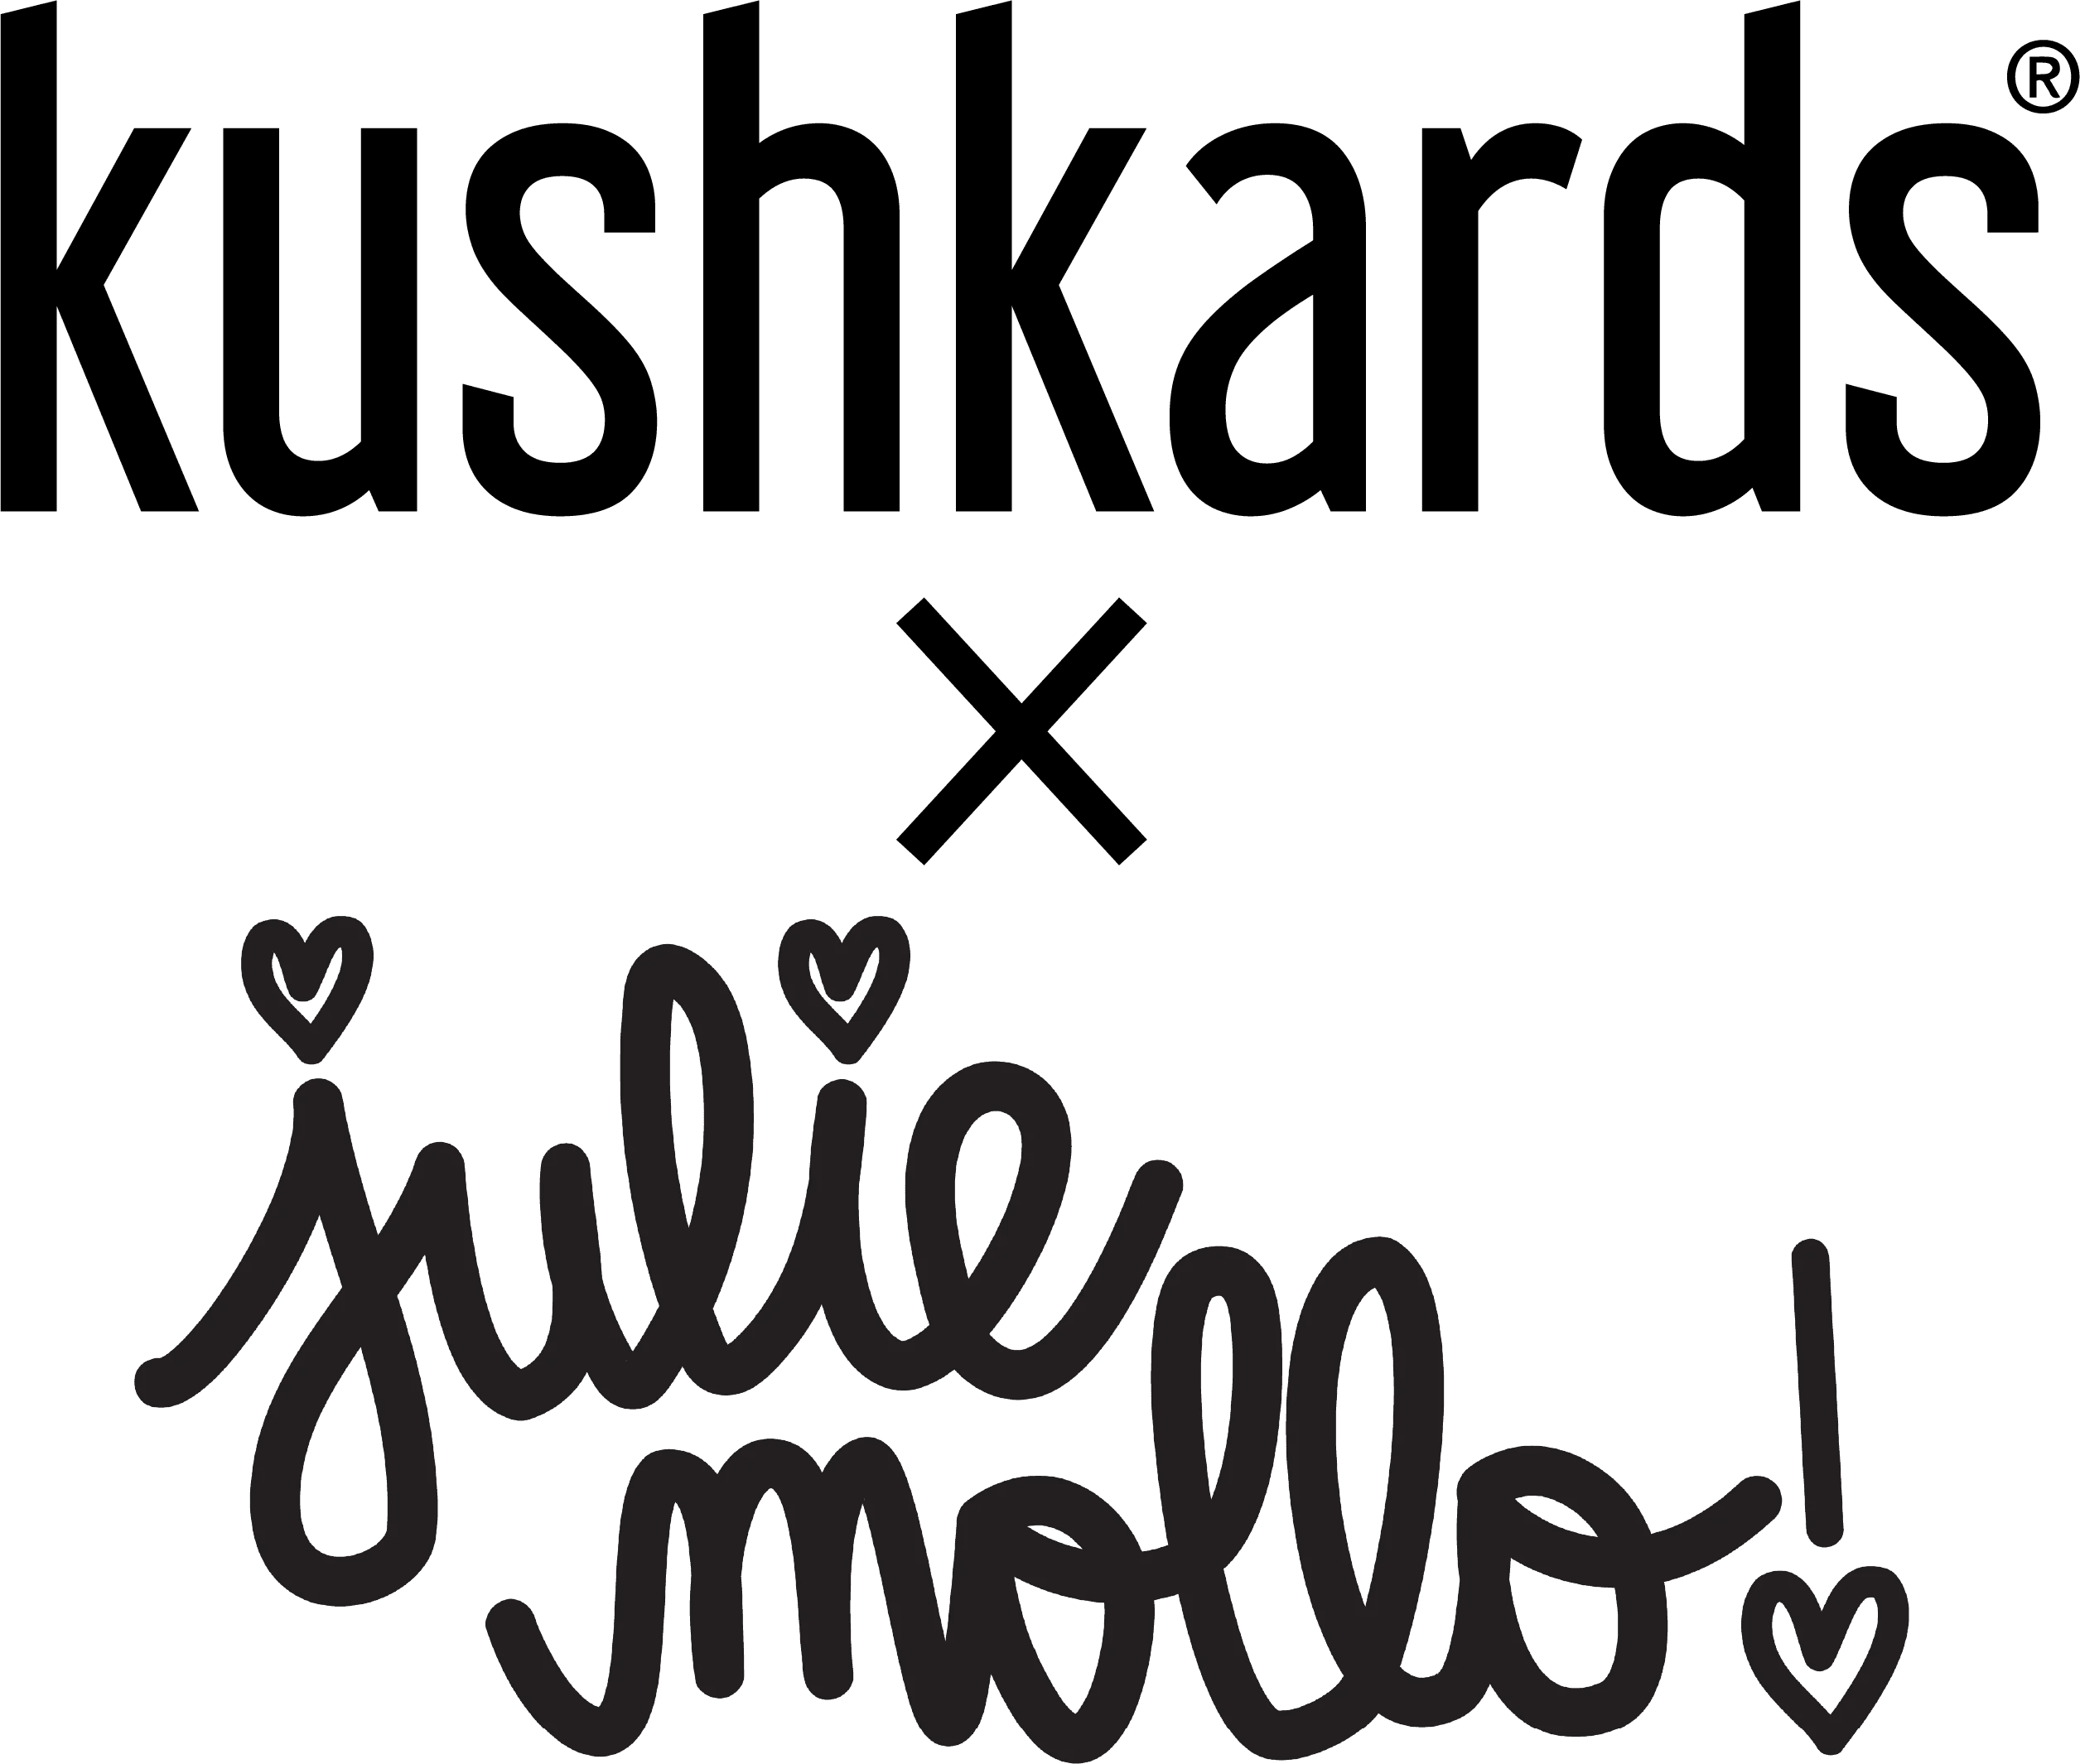 Image of the KushKards &amp; Julie Mollo logos for our KushKards x Julie Mollo Collaboration!